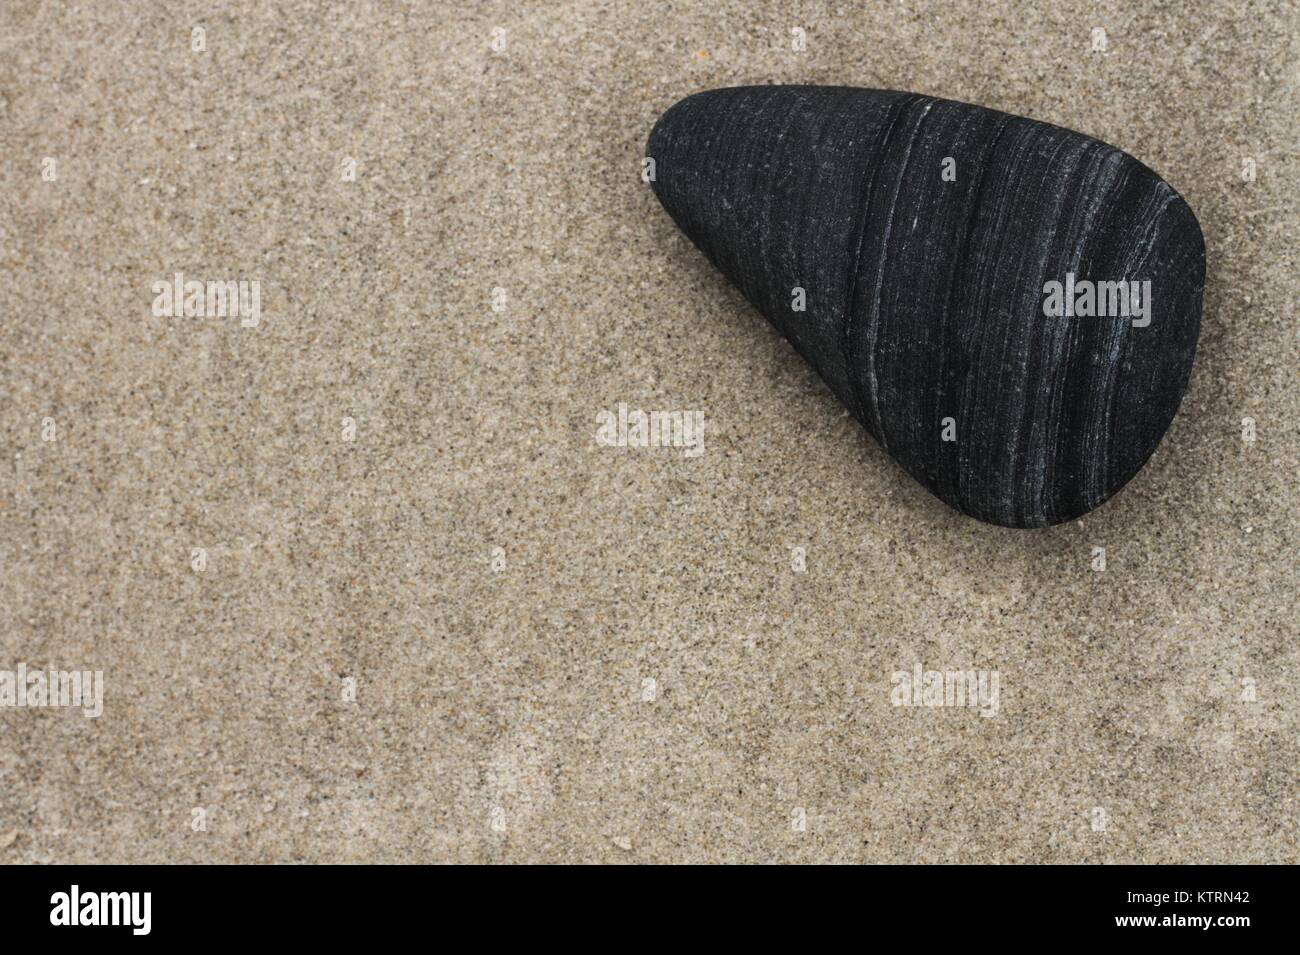 Smooth triangular black stone against sandy background. Stock Photo